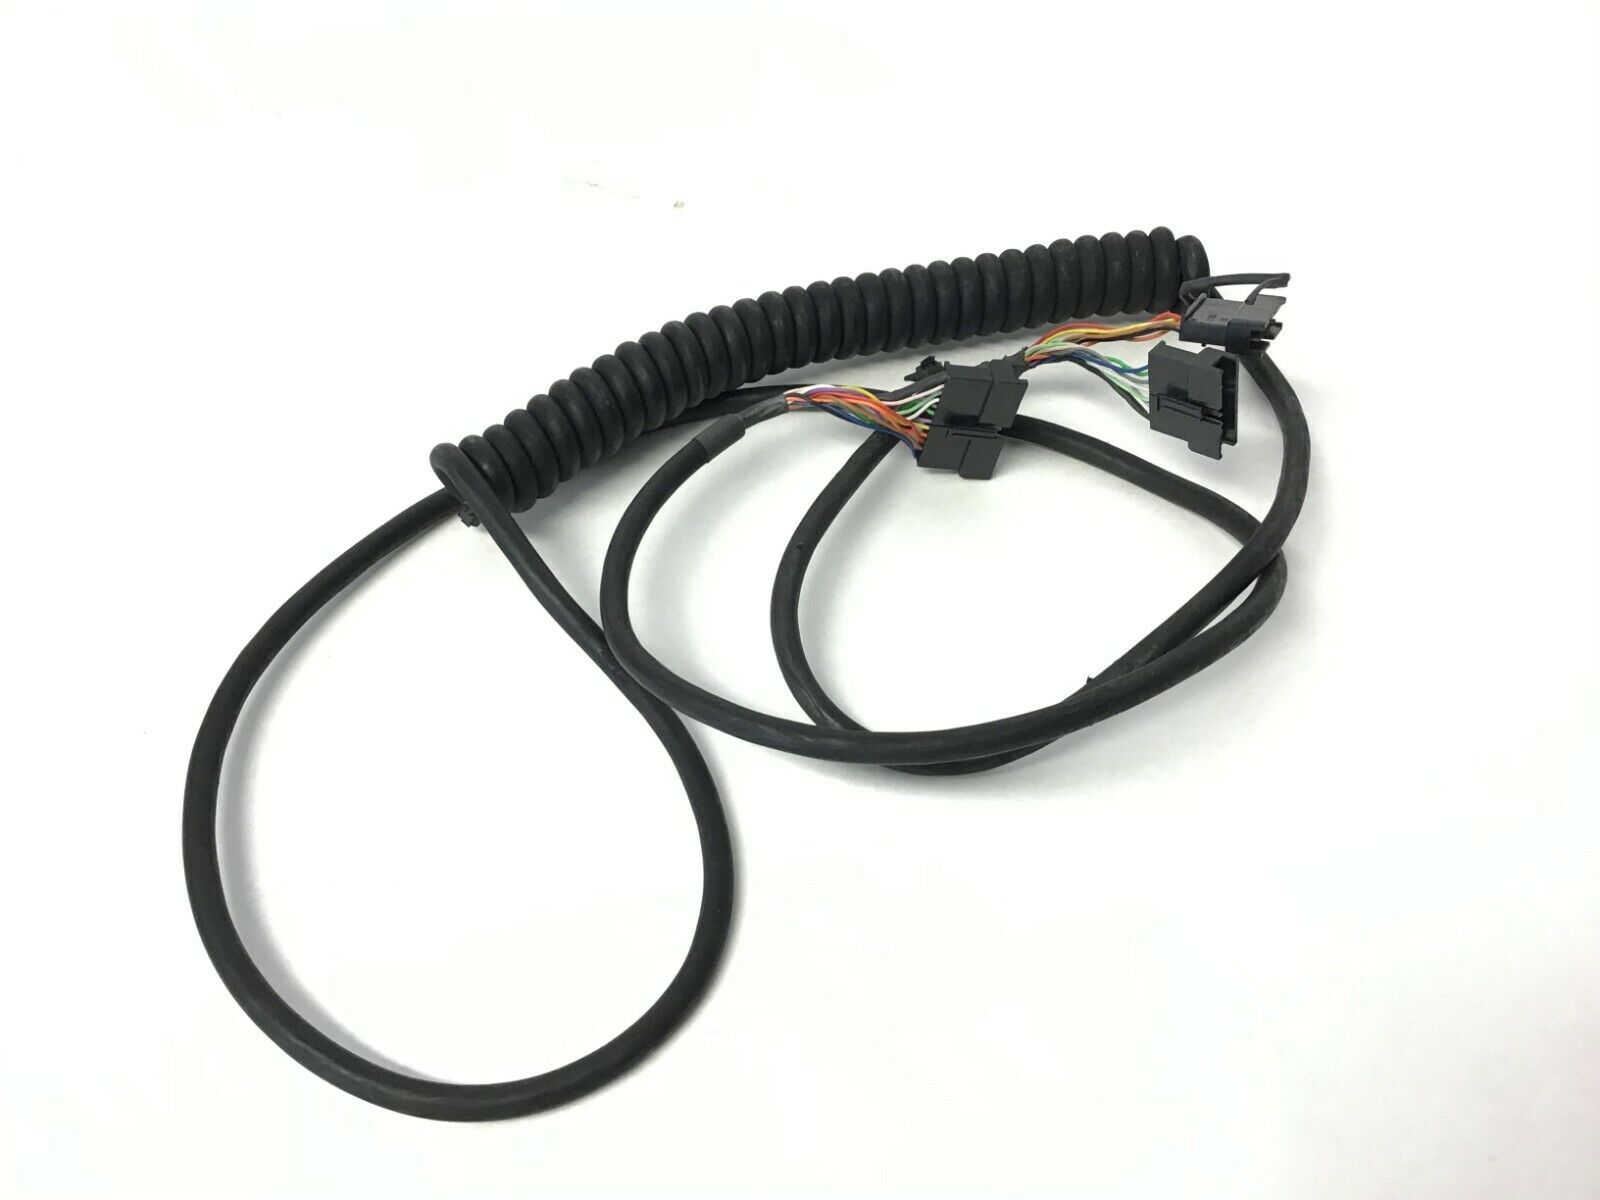 True Fitness 600R Recumbent Bike Hand Sensor Pulse Interconnect Wire Harness (Used)